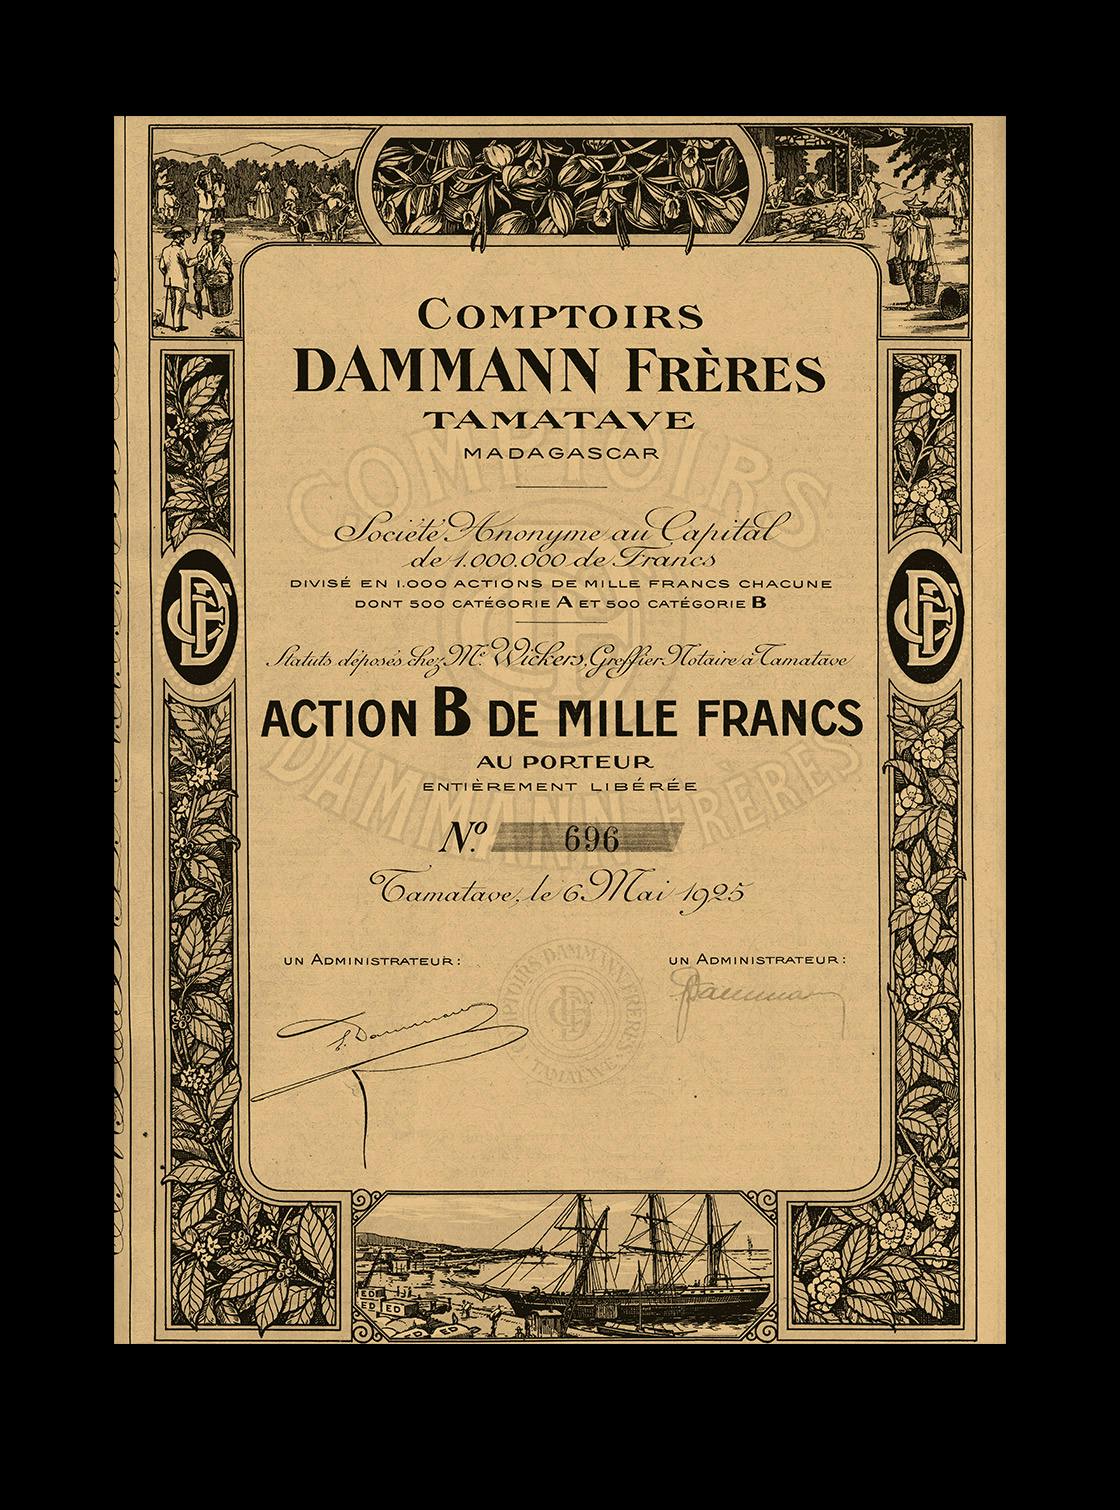 Dammann Frères: France's Oldest Tea Company - TeaTime Magazine